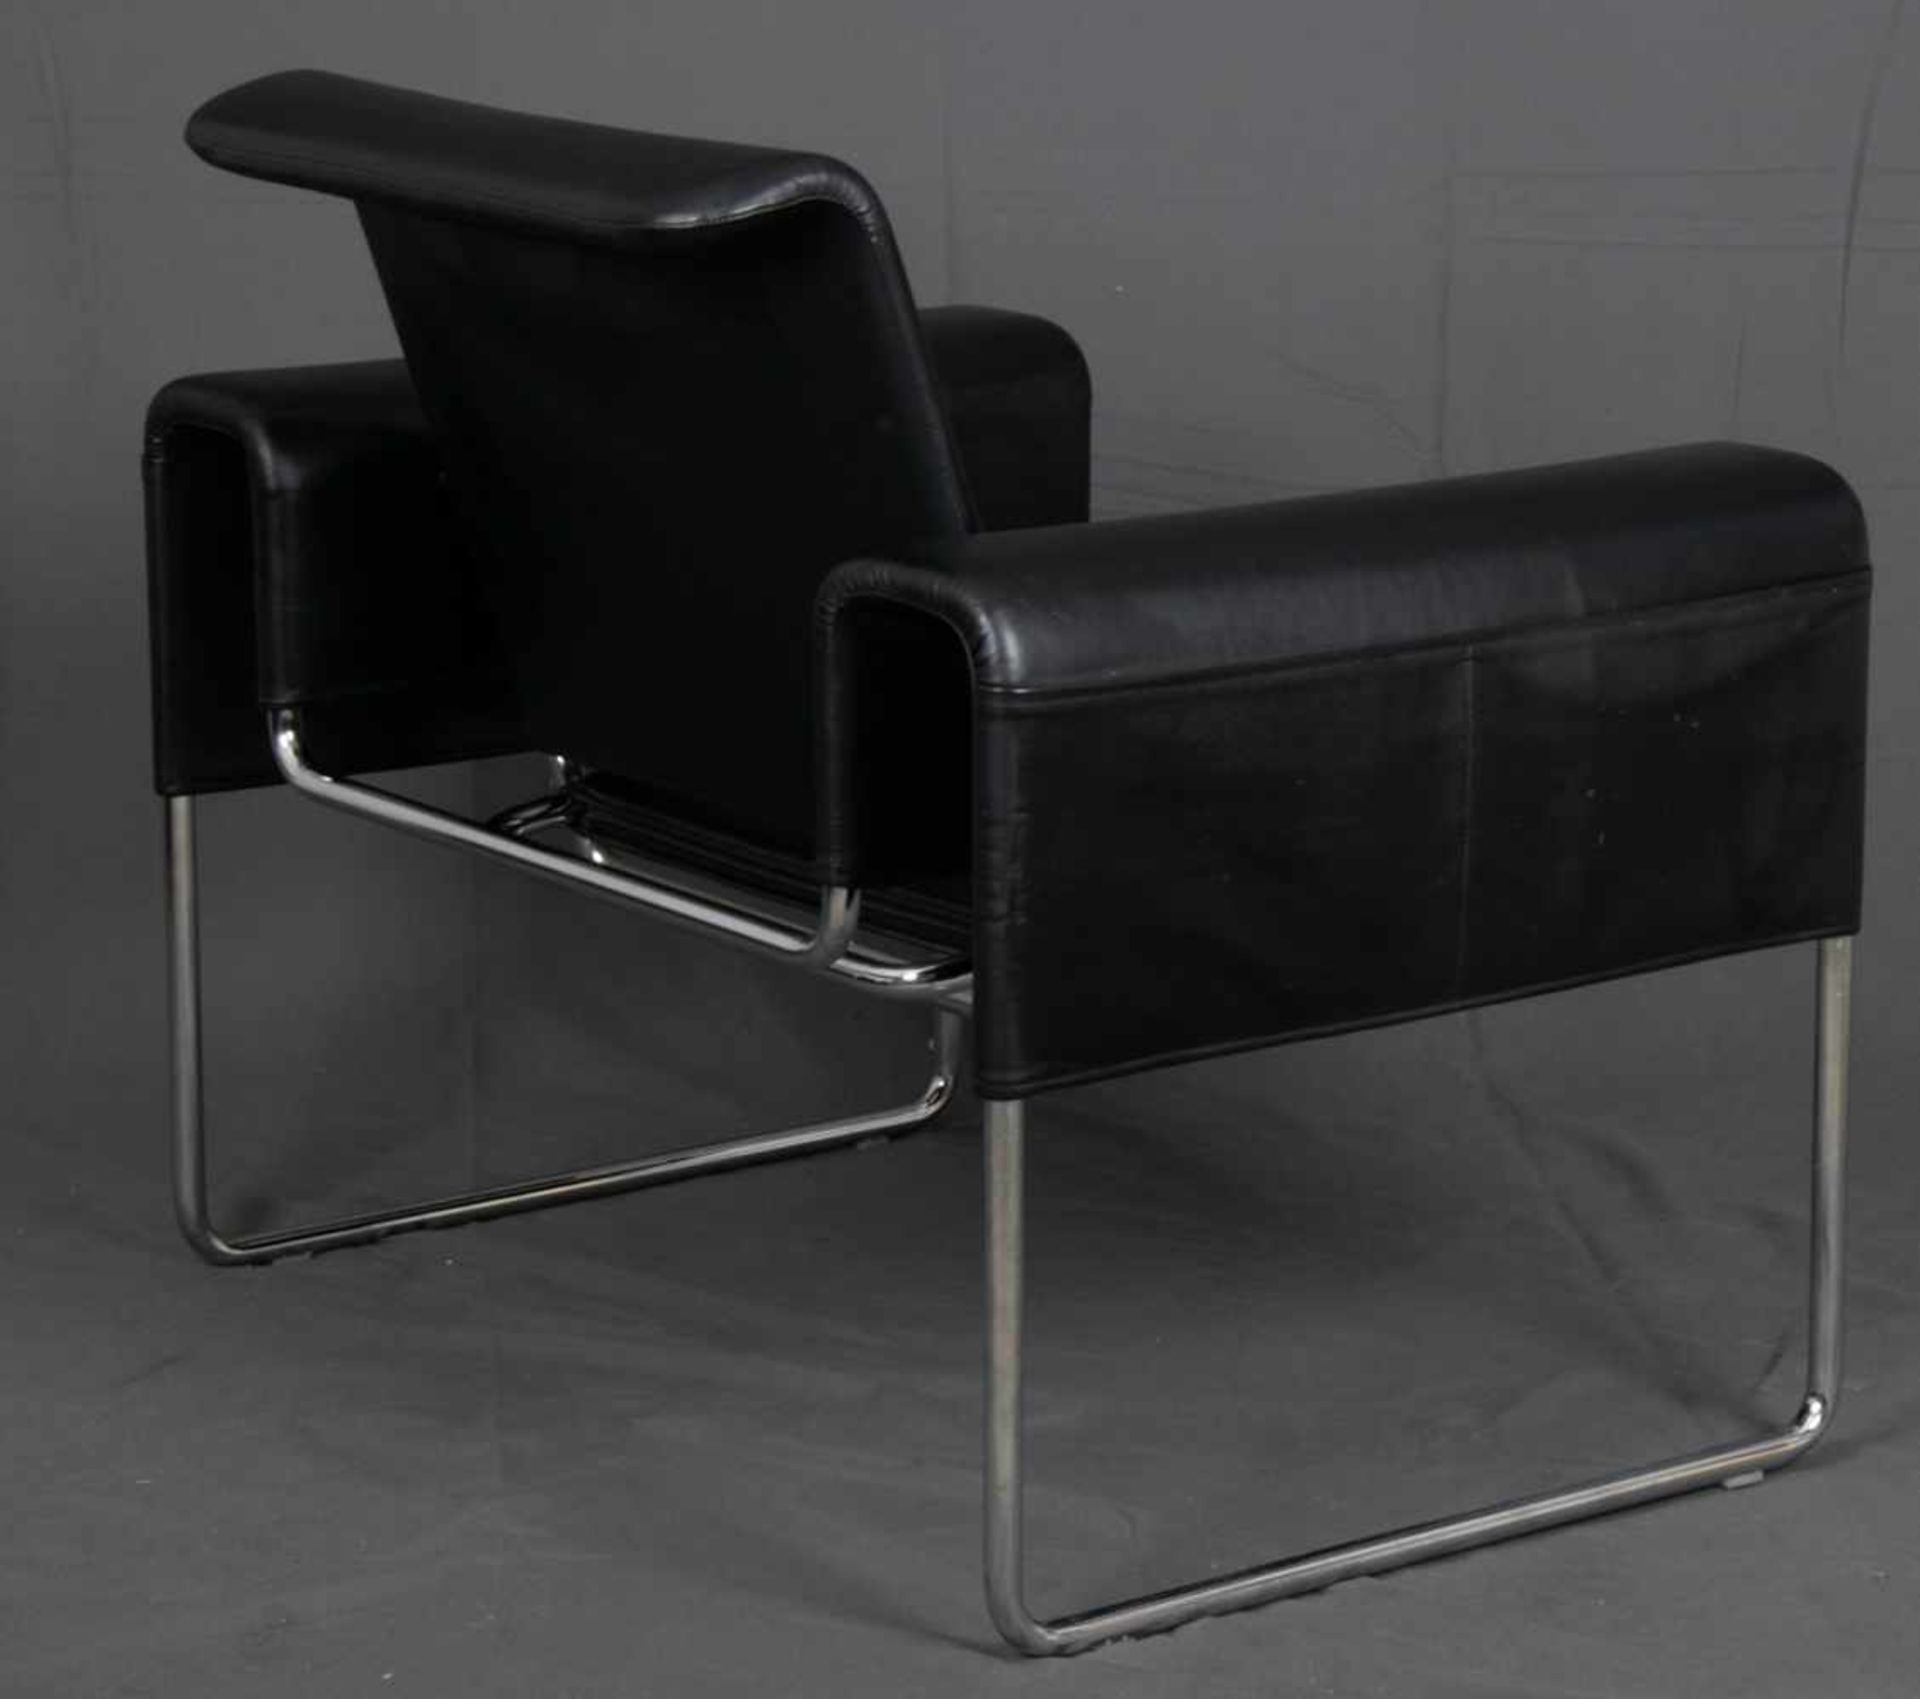 Lounge-Sessel "MOOD"-Design Studio 7.5, 2006. L & C ARNOLD, Stendal. Stahlrohrsessel mit schwarzer - Bild 4 aus 7